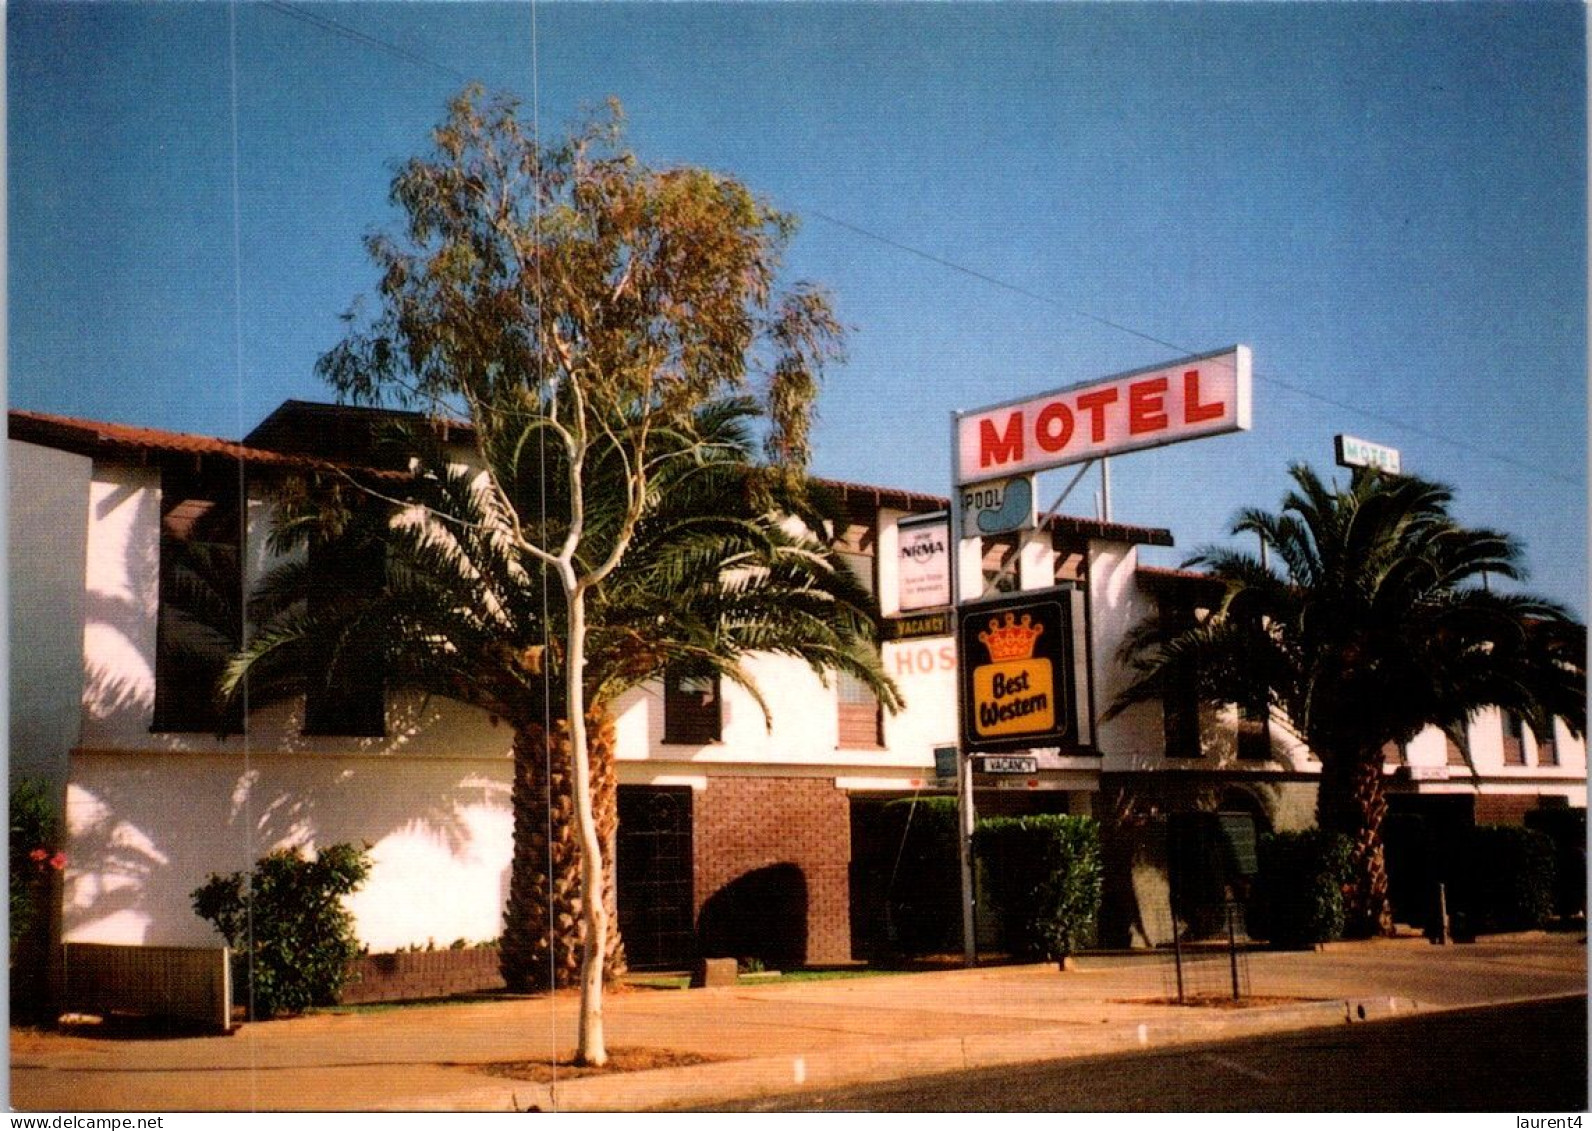 15-5-2024 (5 Z 15) Australia - NSW - Broken Hill Mine Host Hotel - Broken Hill